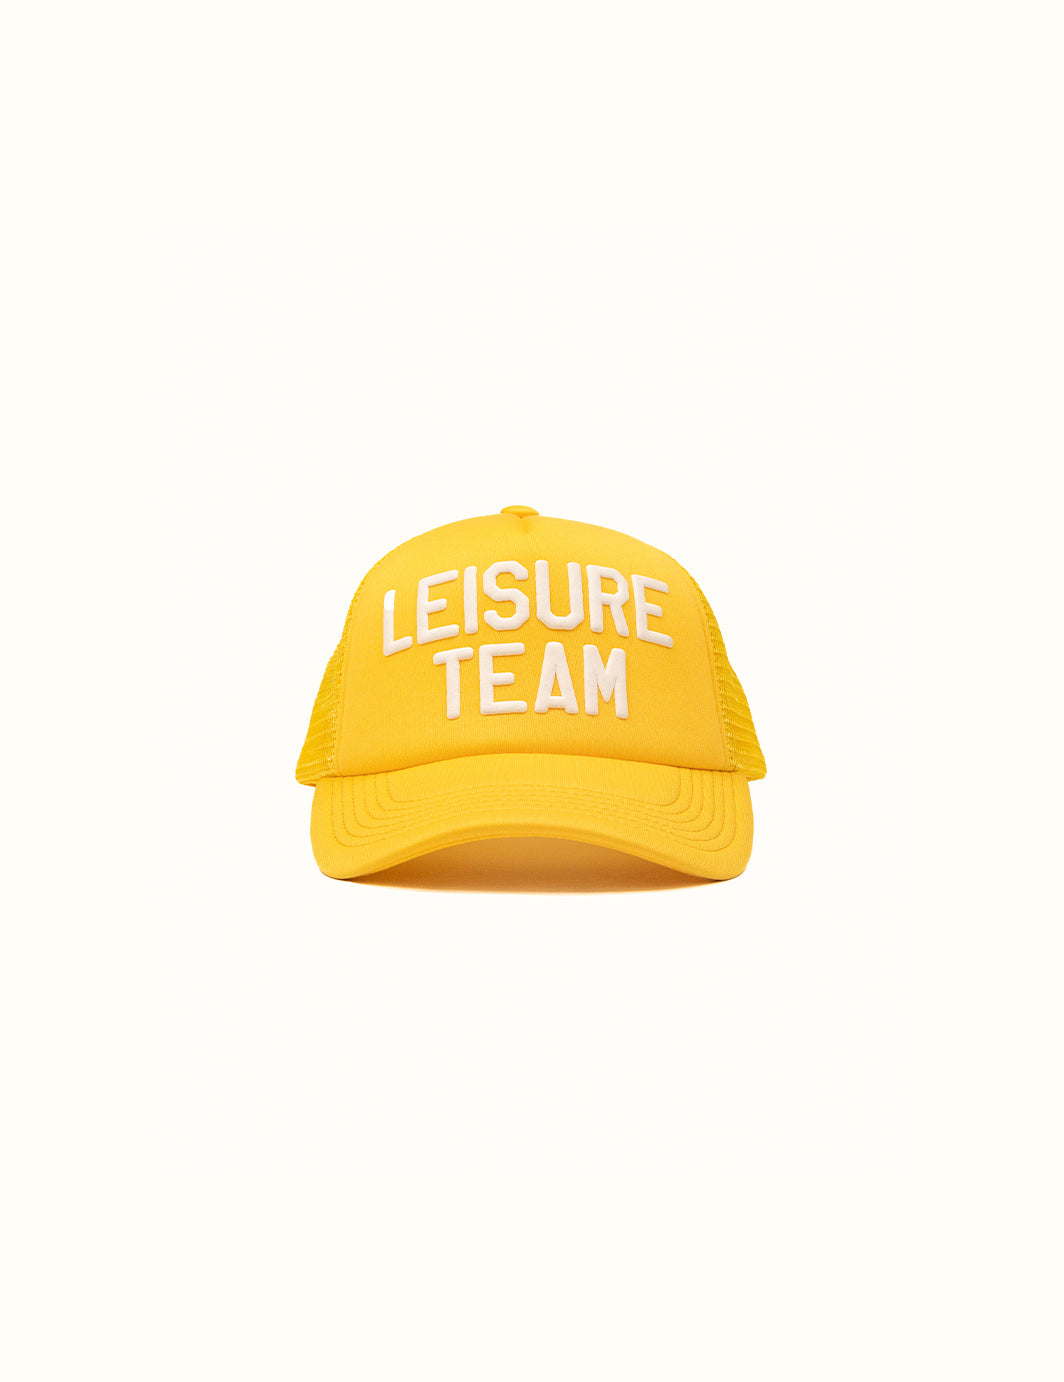 Leisure Team Trucker Yellow